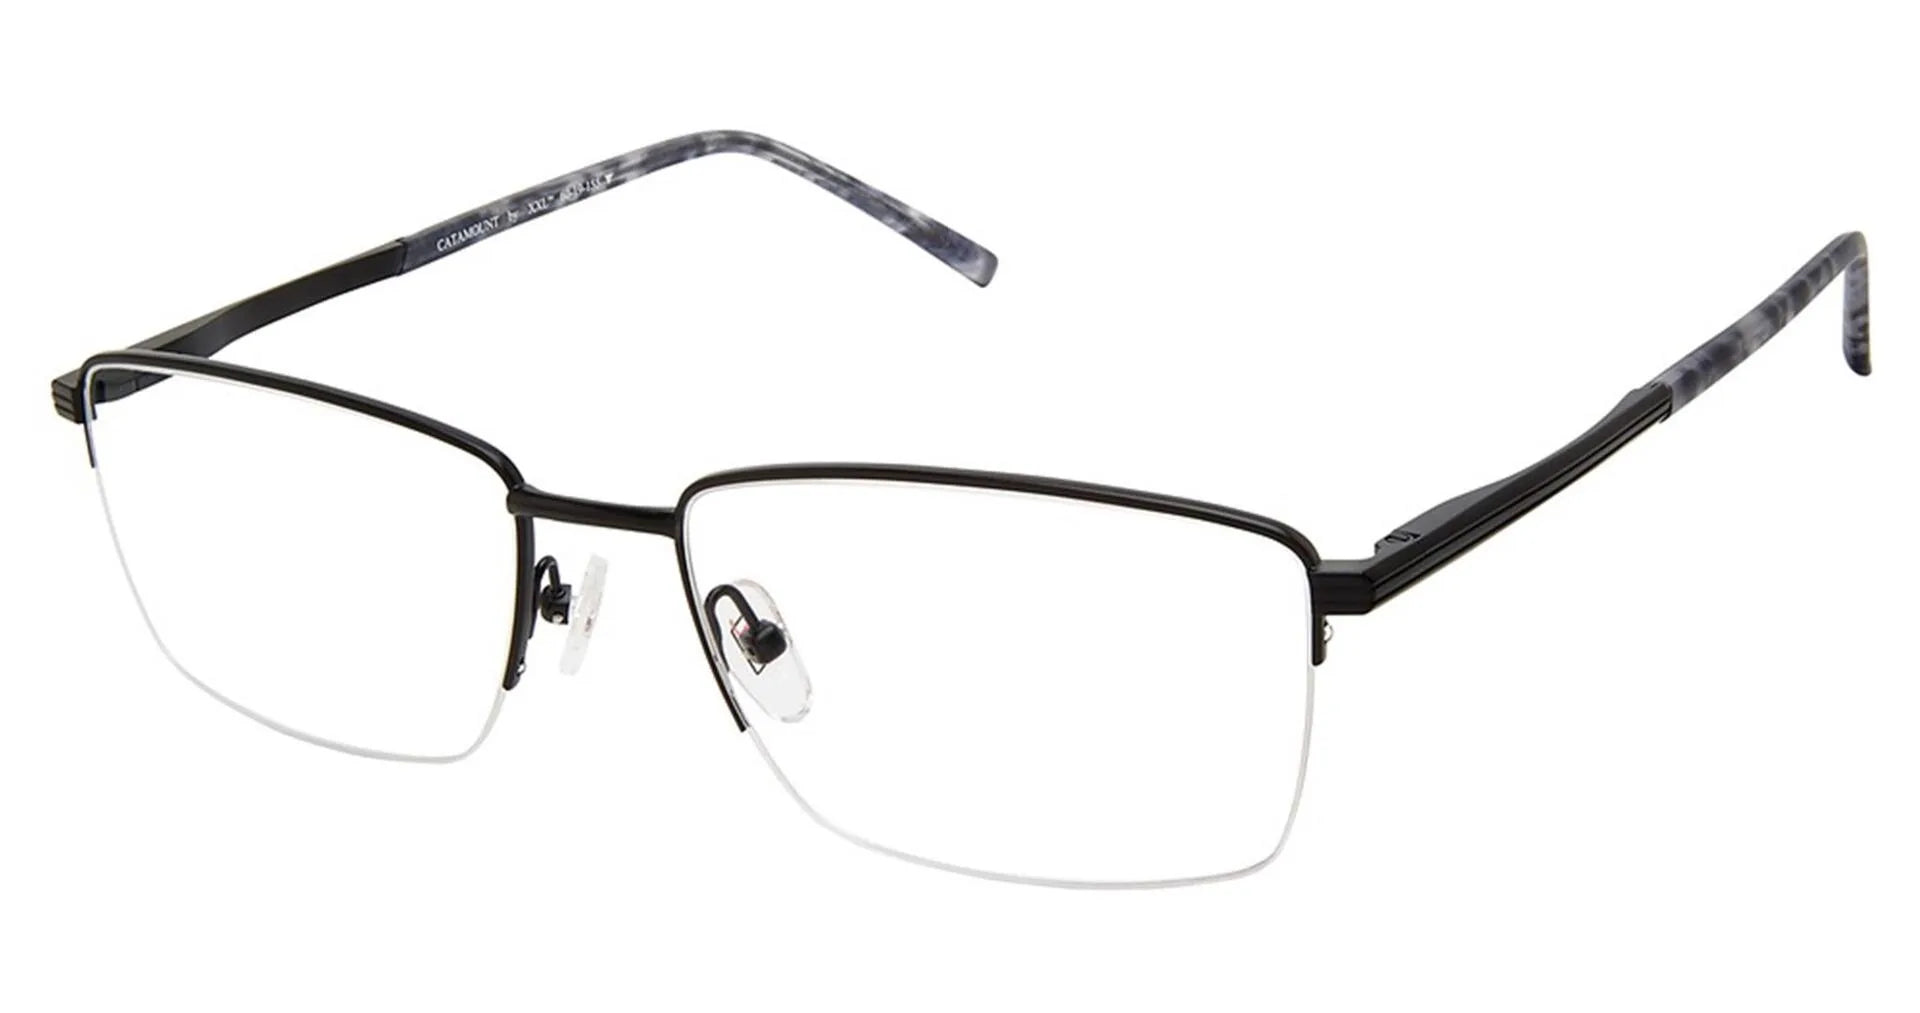 XXL Eyewear Catamount Eyeglasses Black